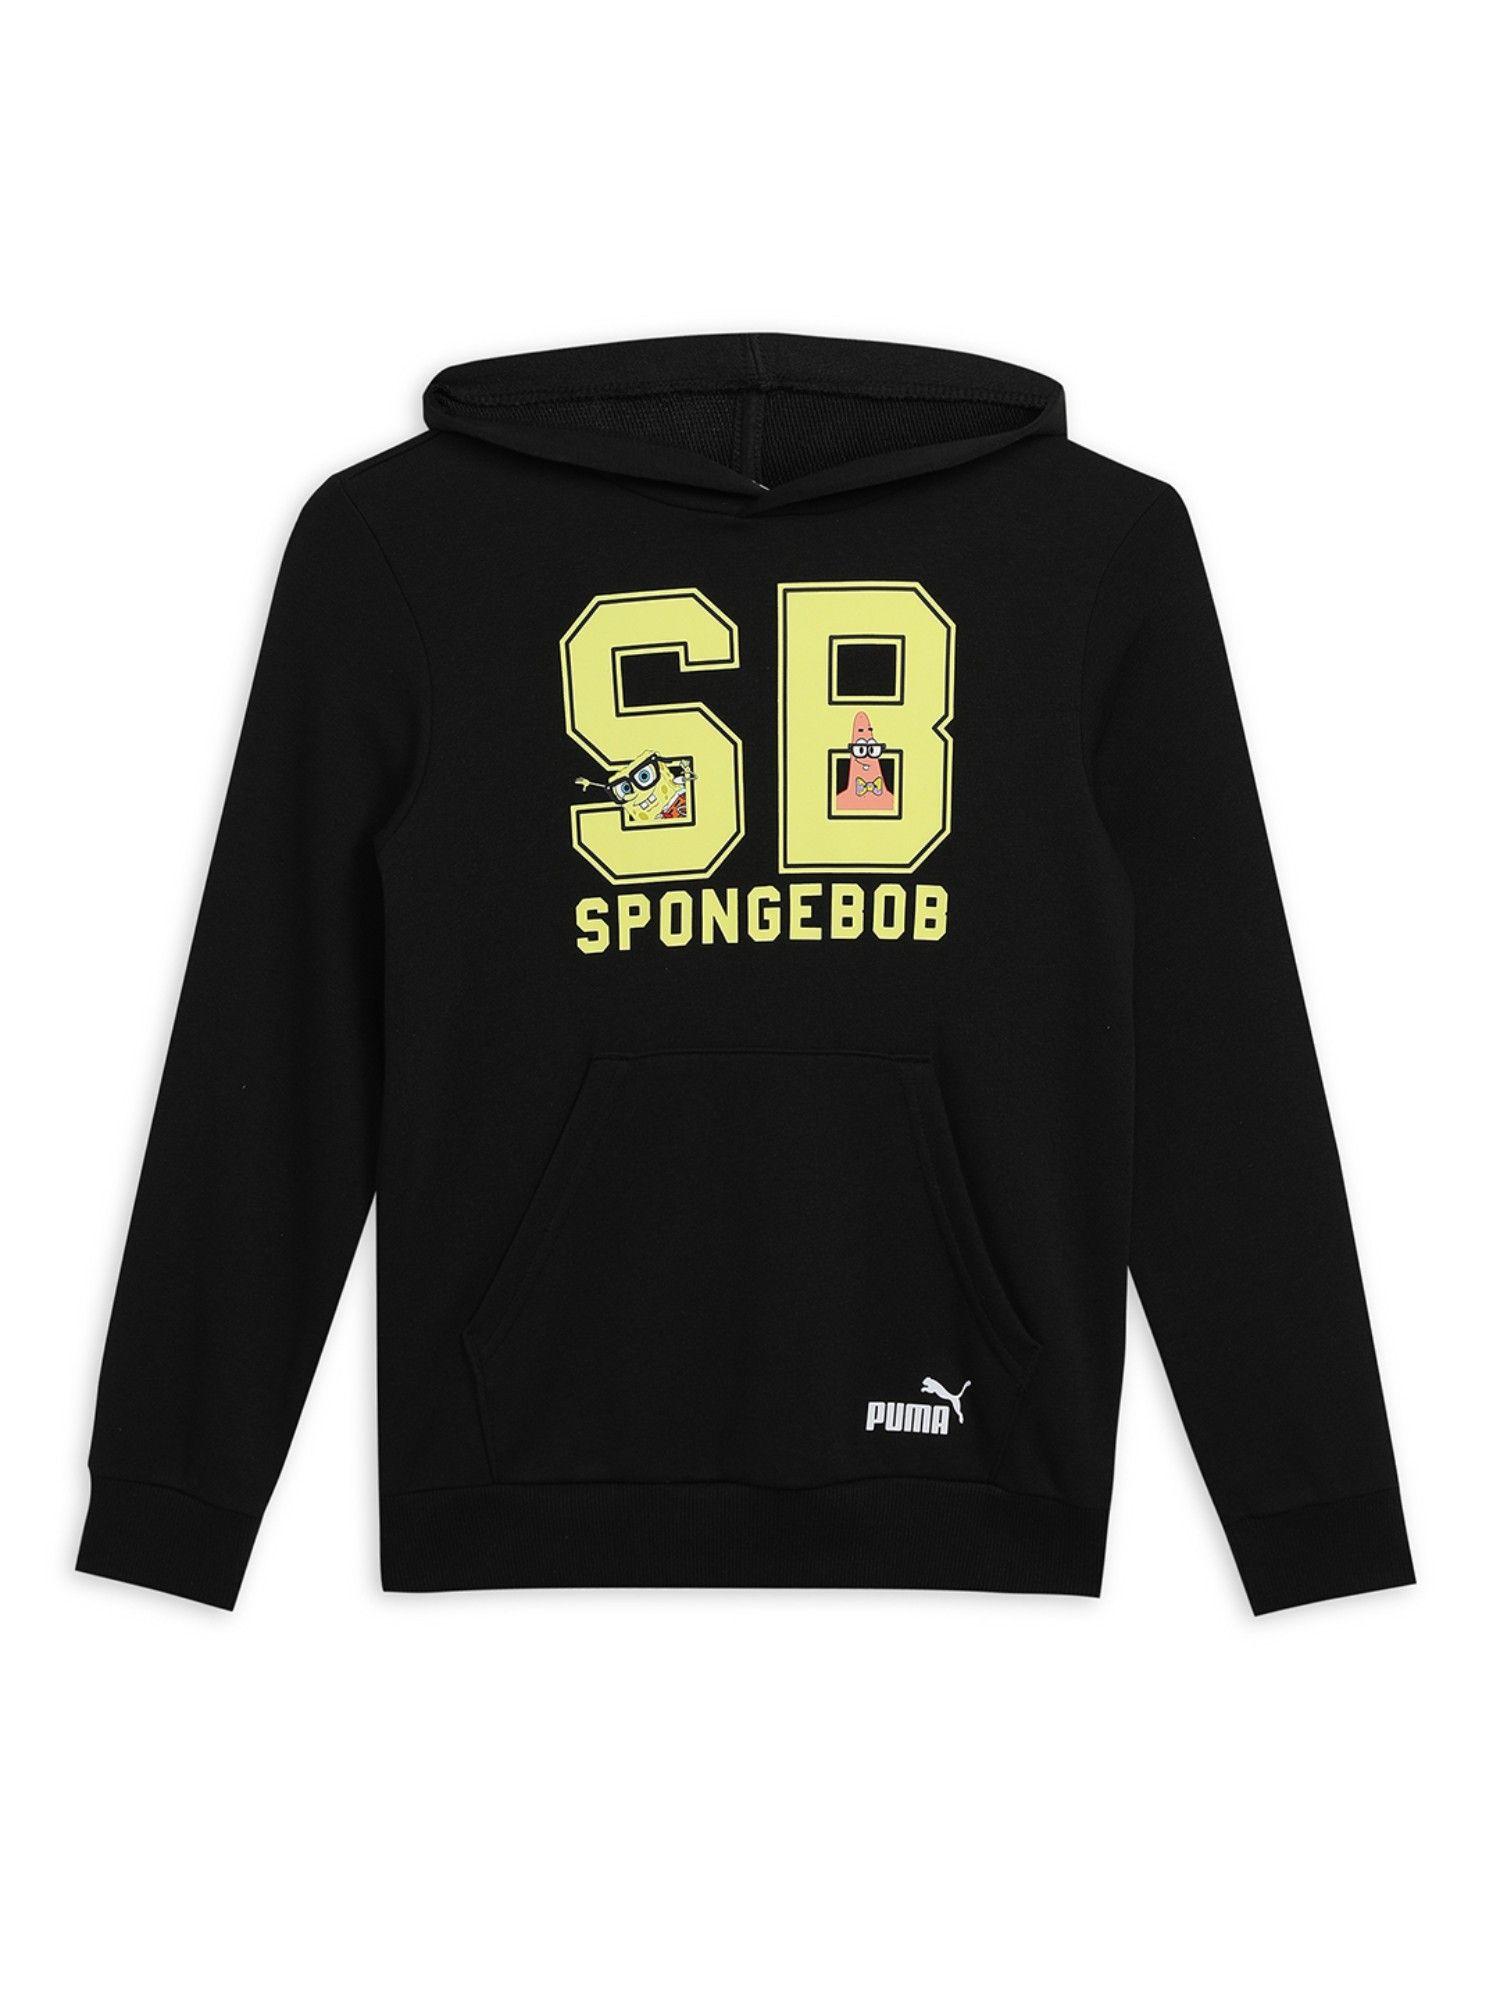 x-spongebob-boys-black-hoodies